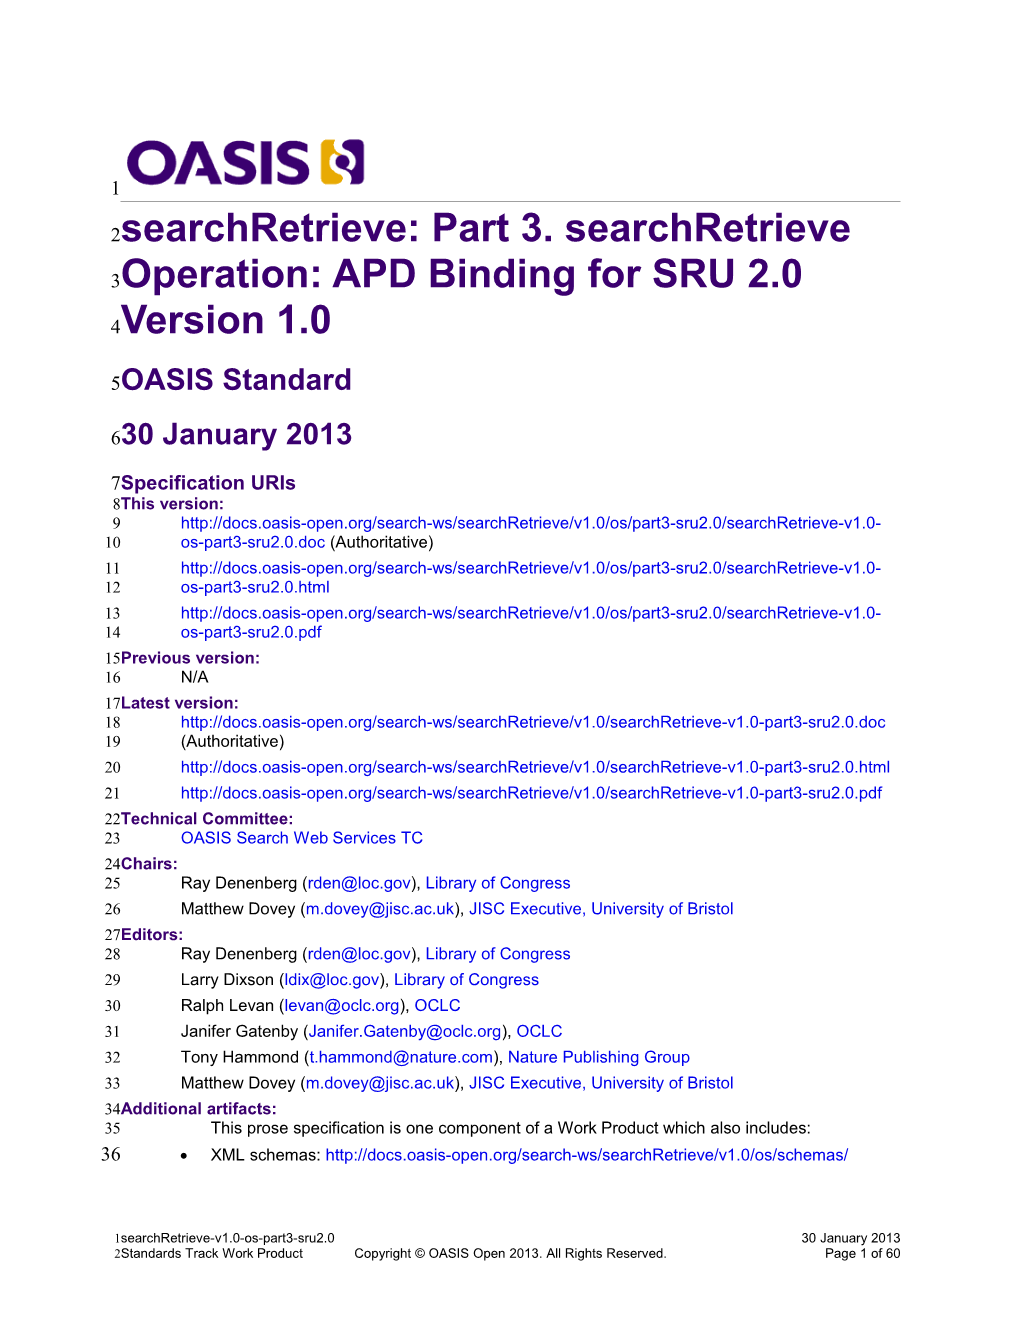 Searchretrieve: Part 3. Searchretrieve Operation: APD Binding for SRU 2.0 Version 1.0